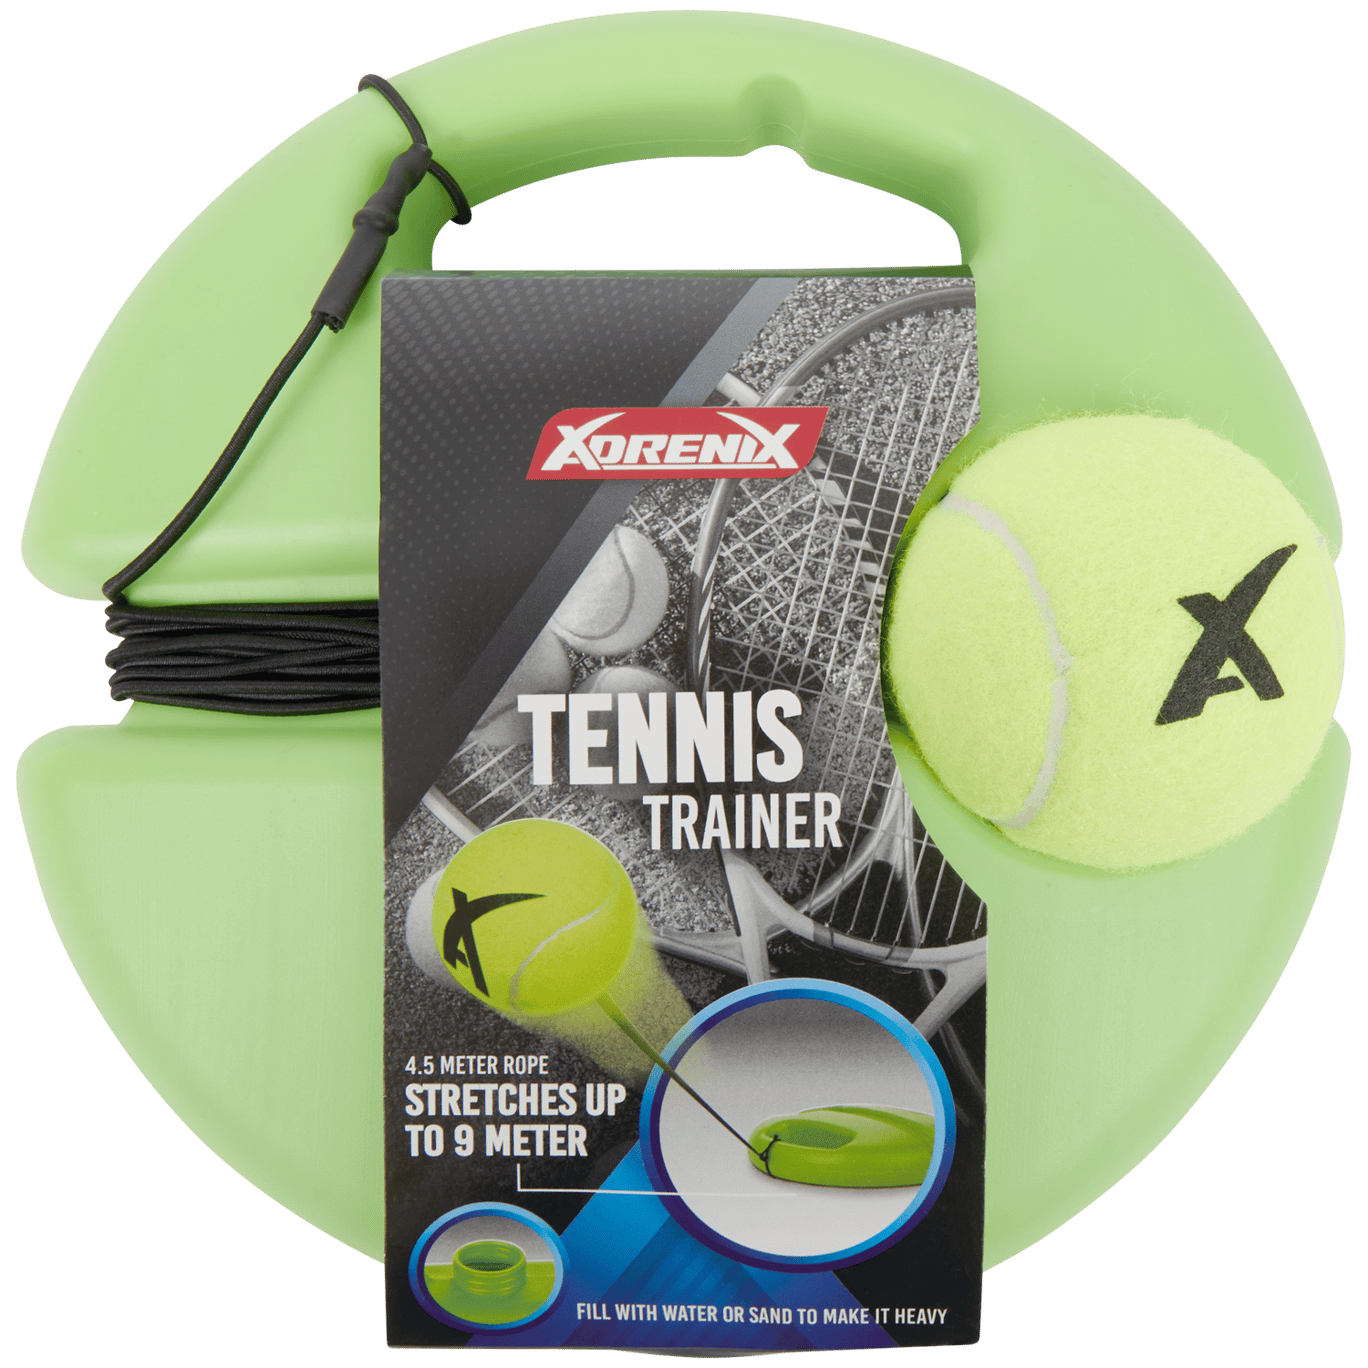 XdreniX Tennistrainer